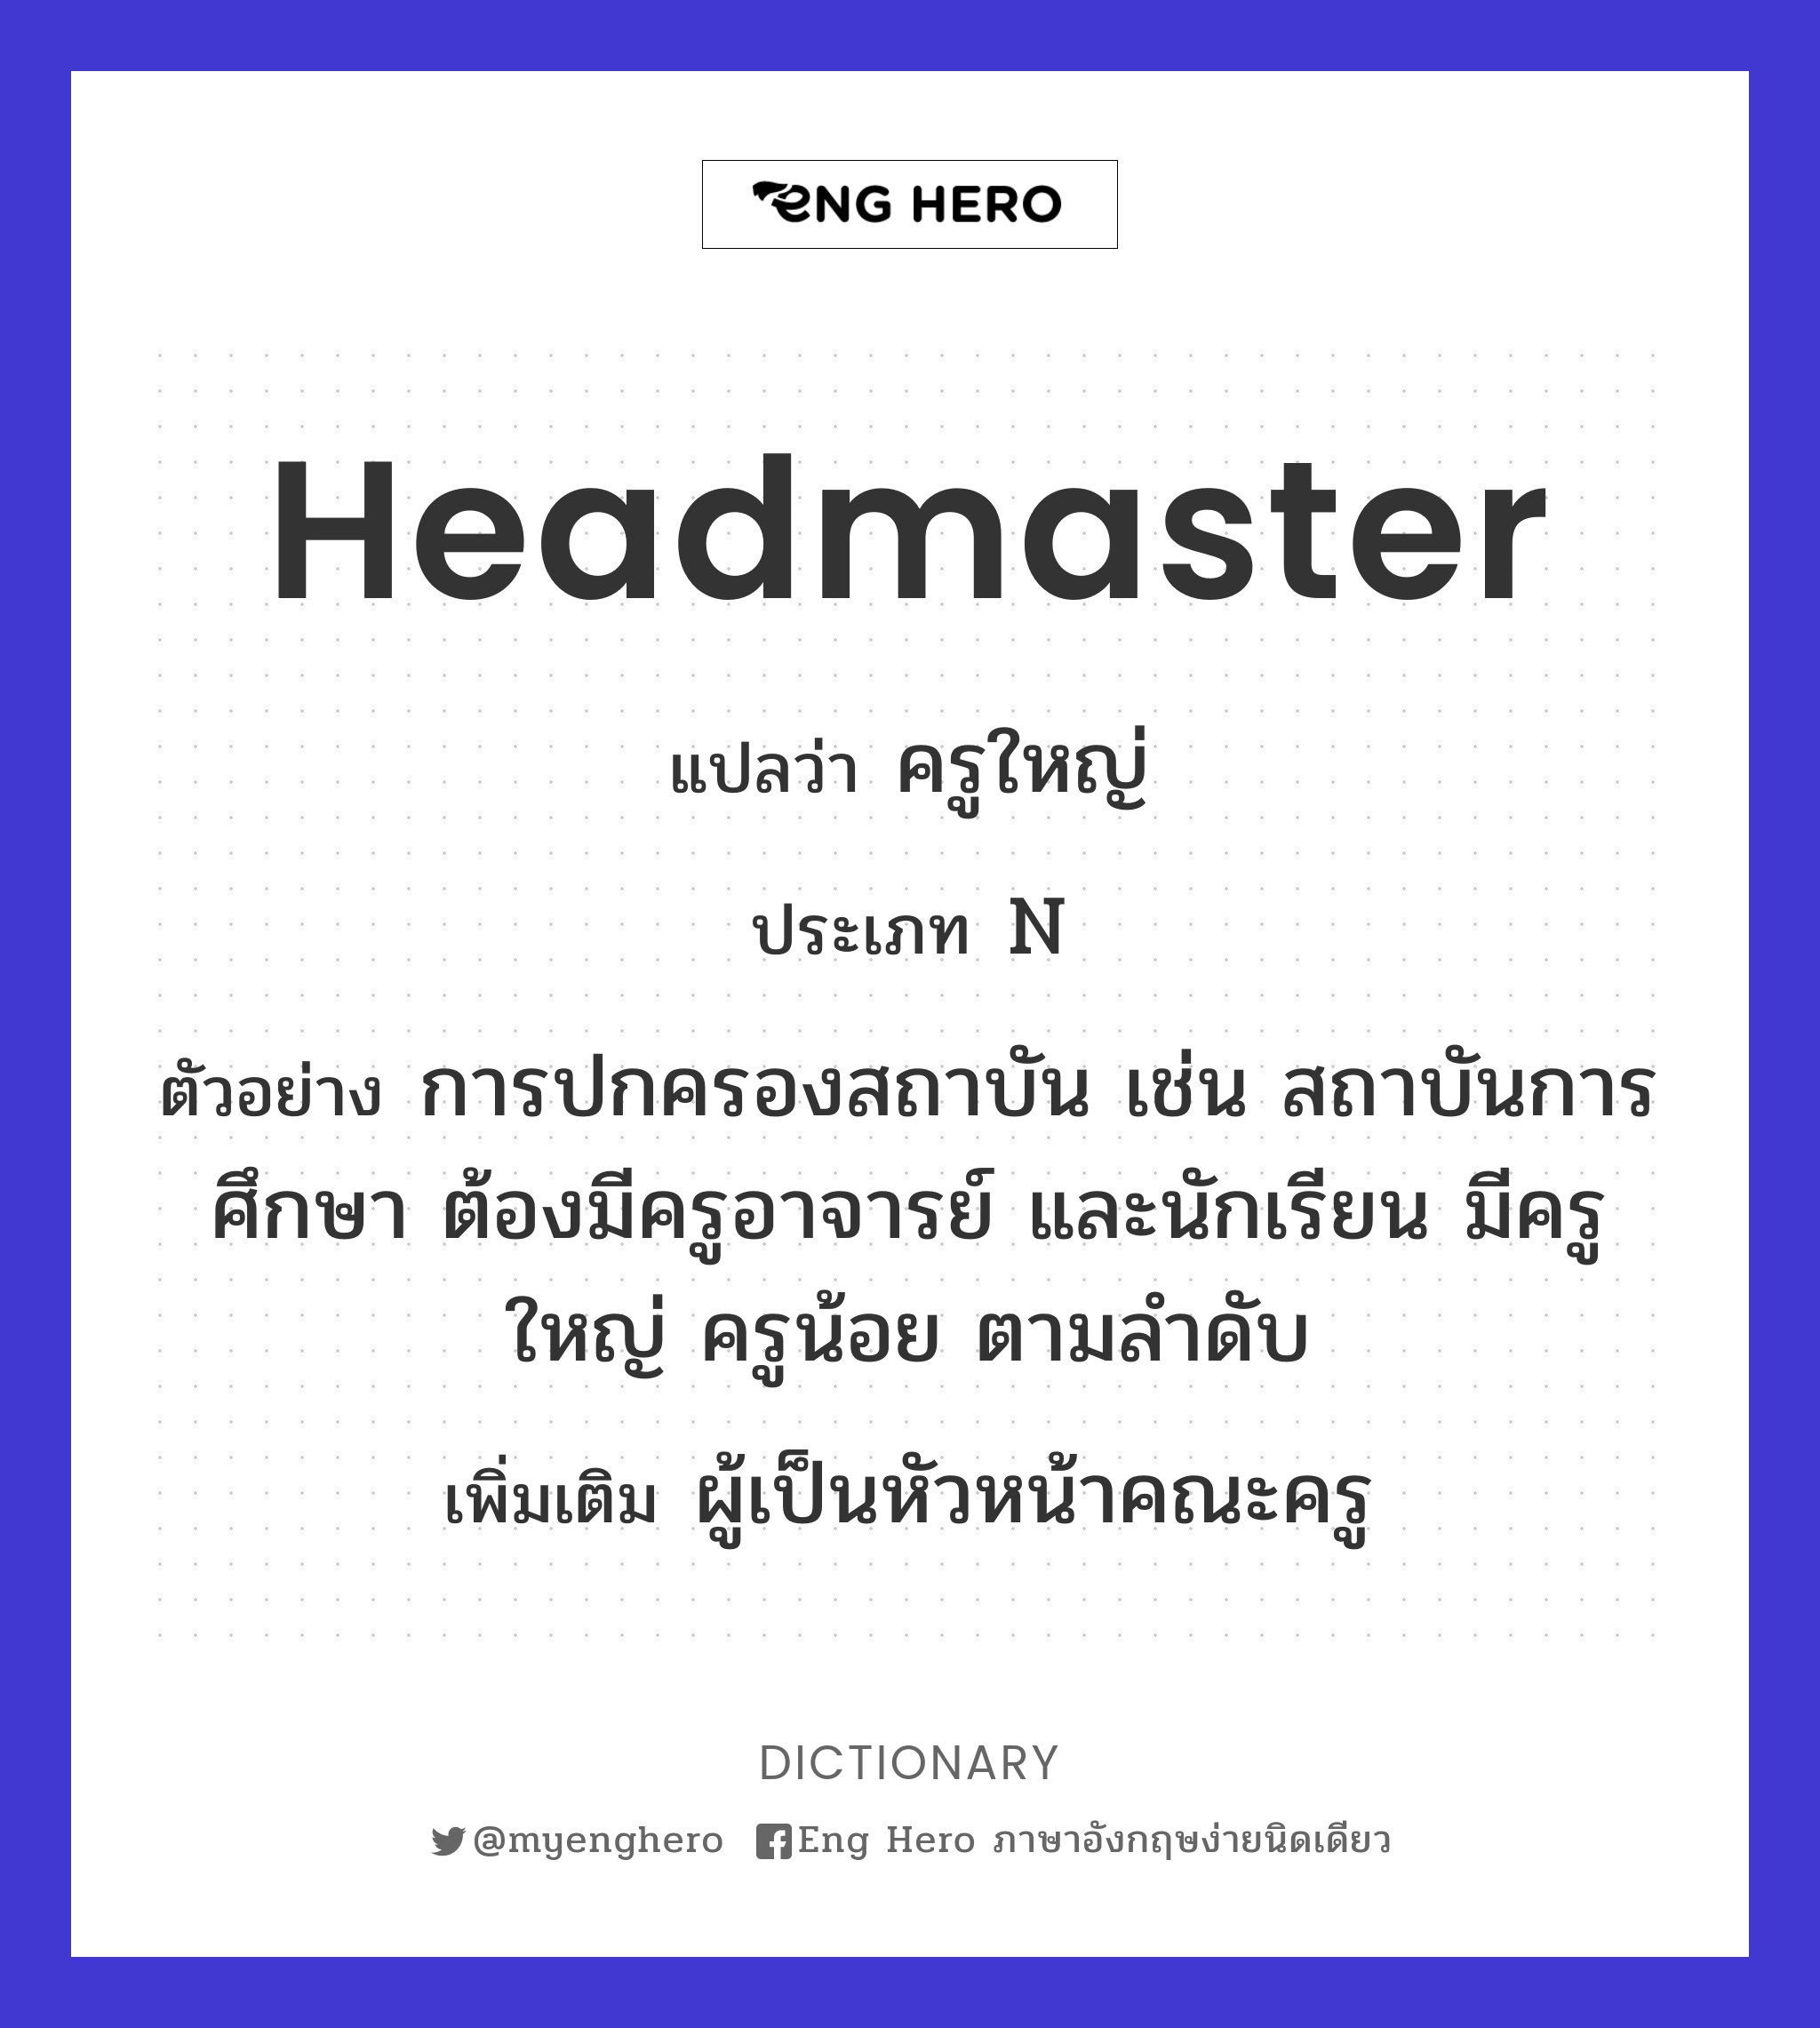 headmaster